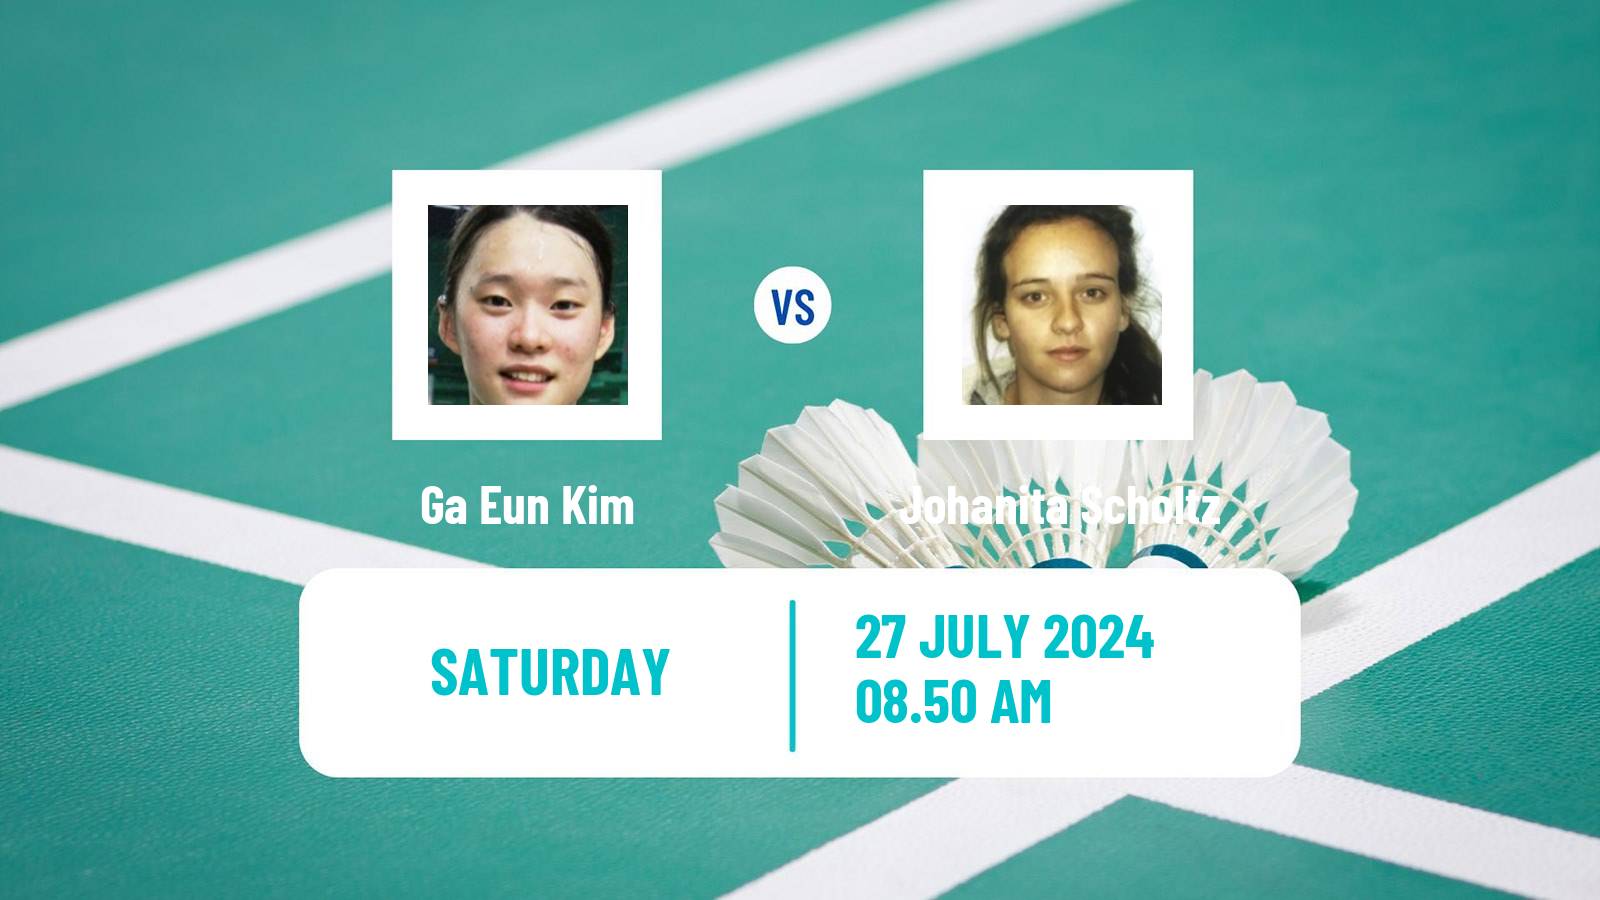 Badminton BWF Olympic Games Women Ga Eun Kim - Johanita Scholtz